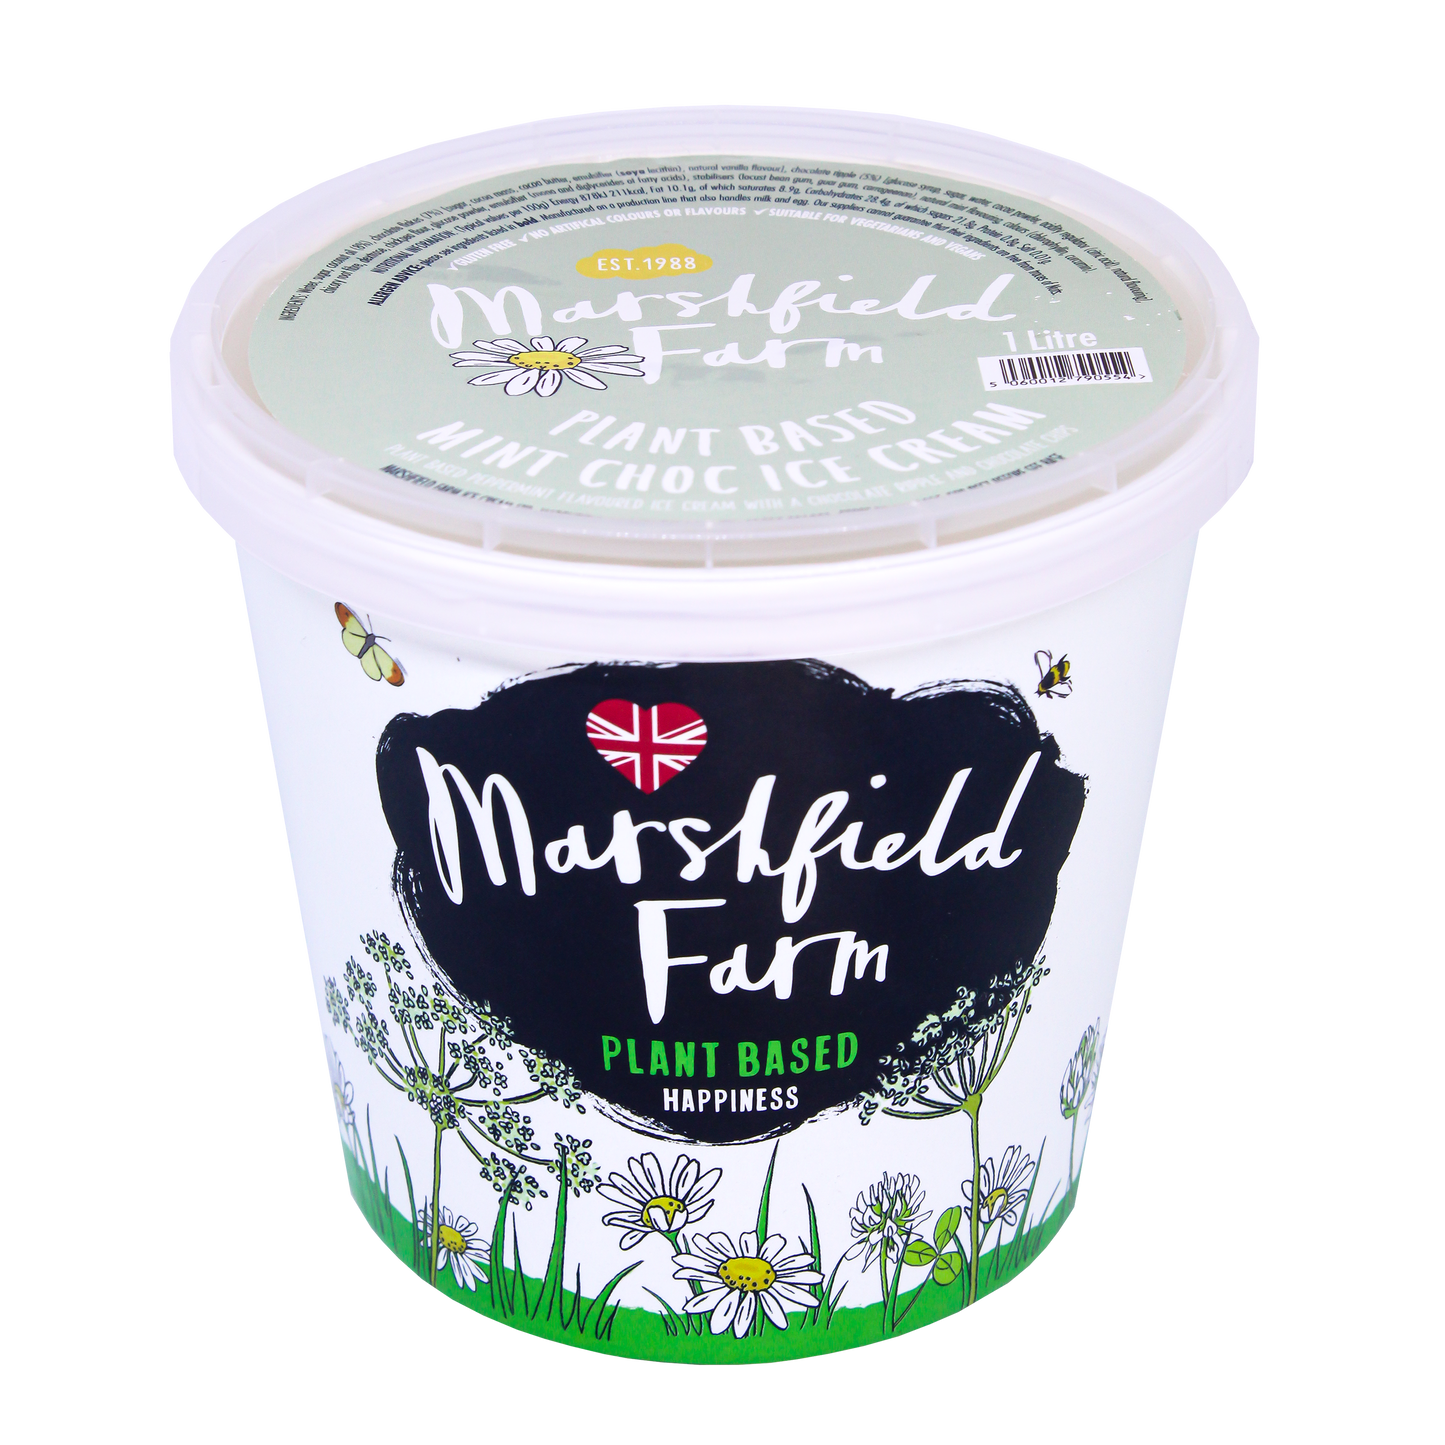 Marshfield Farm Plant Based Mint Choc Ice Cceam 1 litre tub